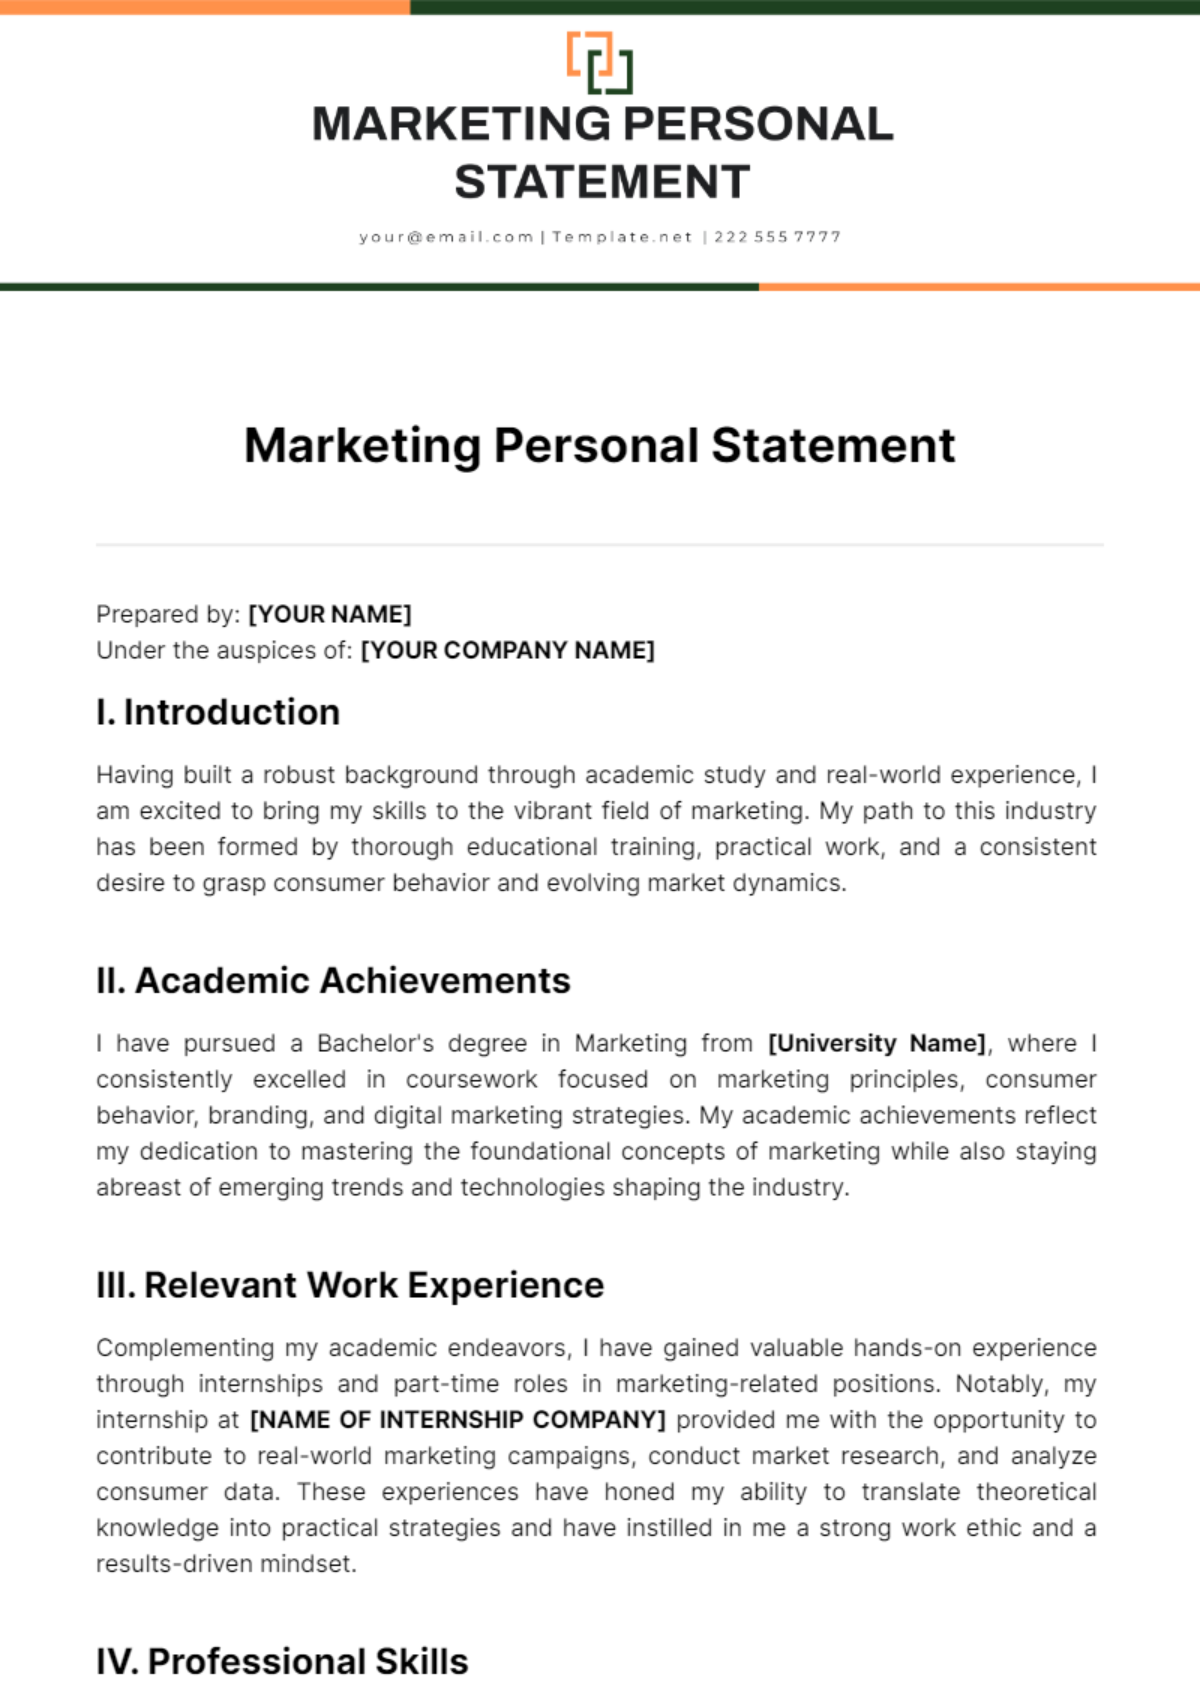 Marketing Personal Statement Template